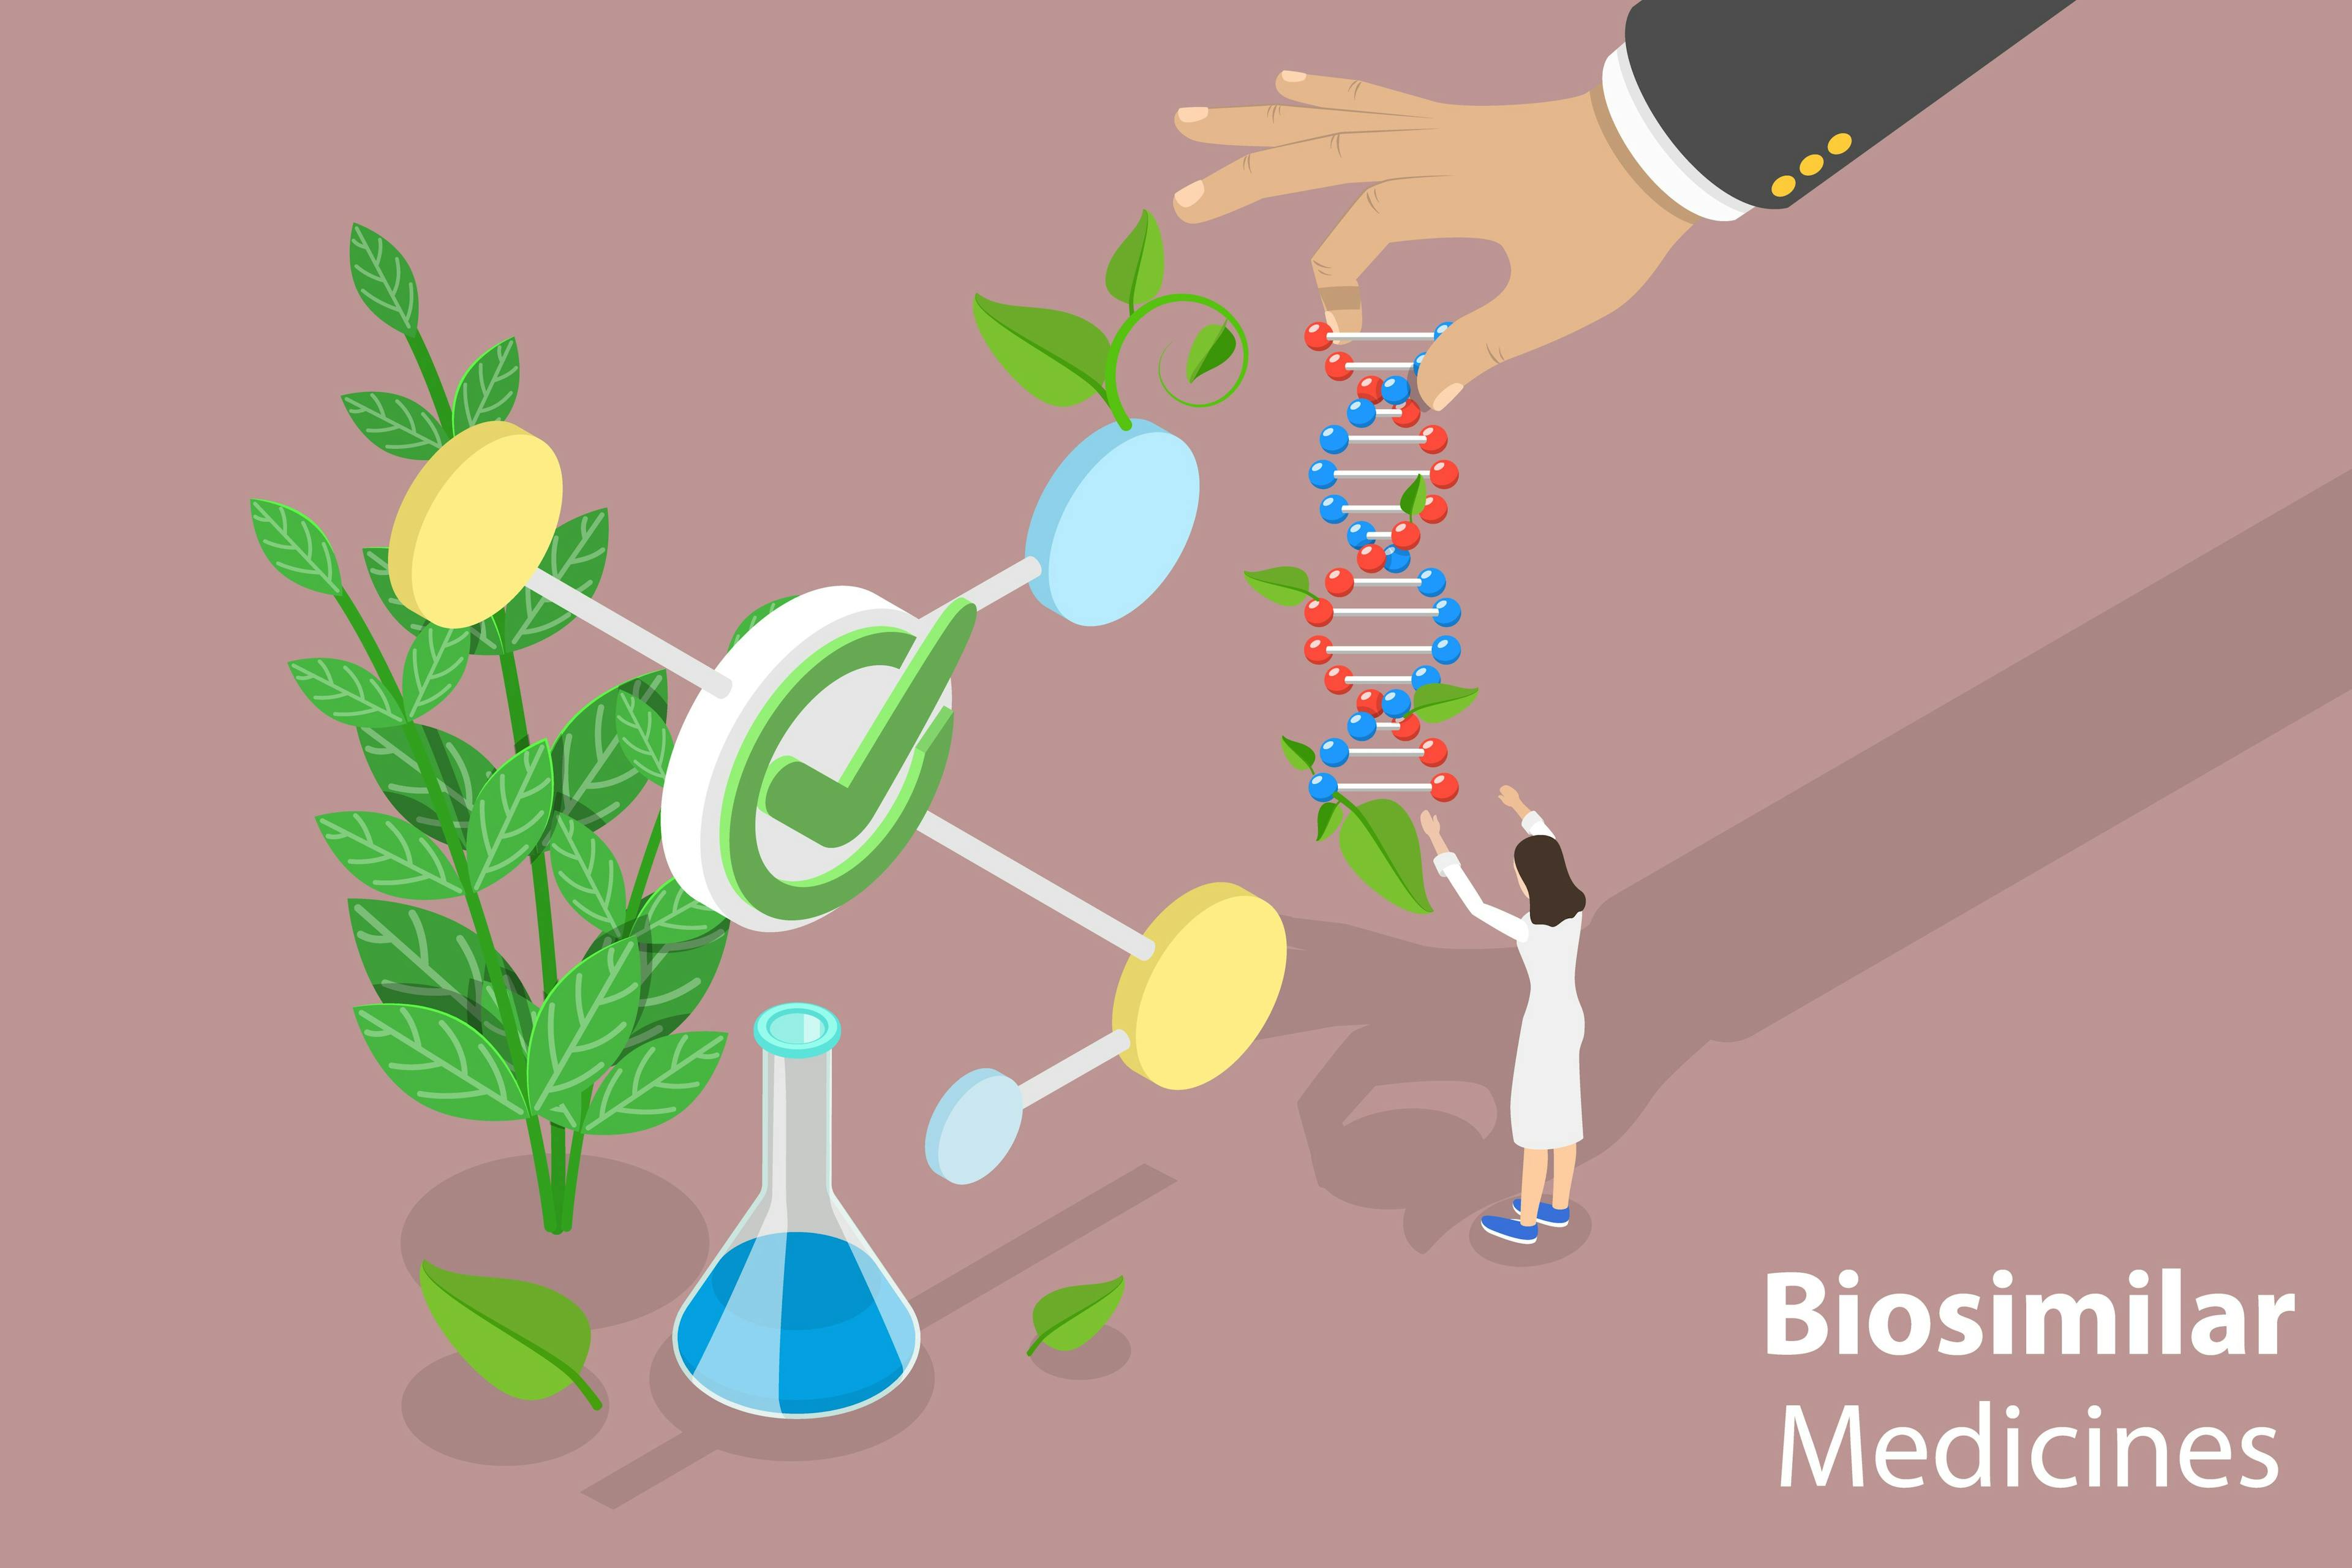 Illustration of biosimilar medicines | Image Credit: TarikVision - stock.adobe.com